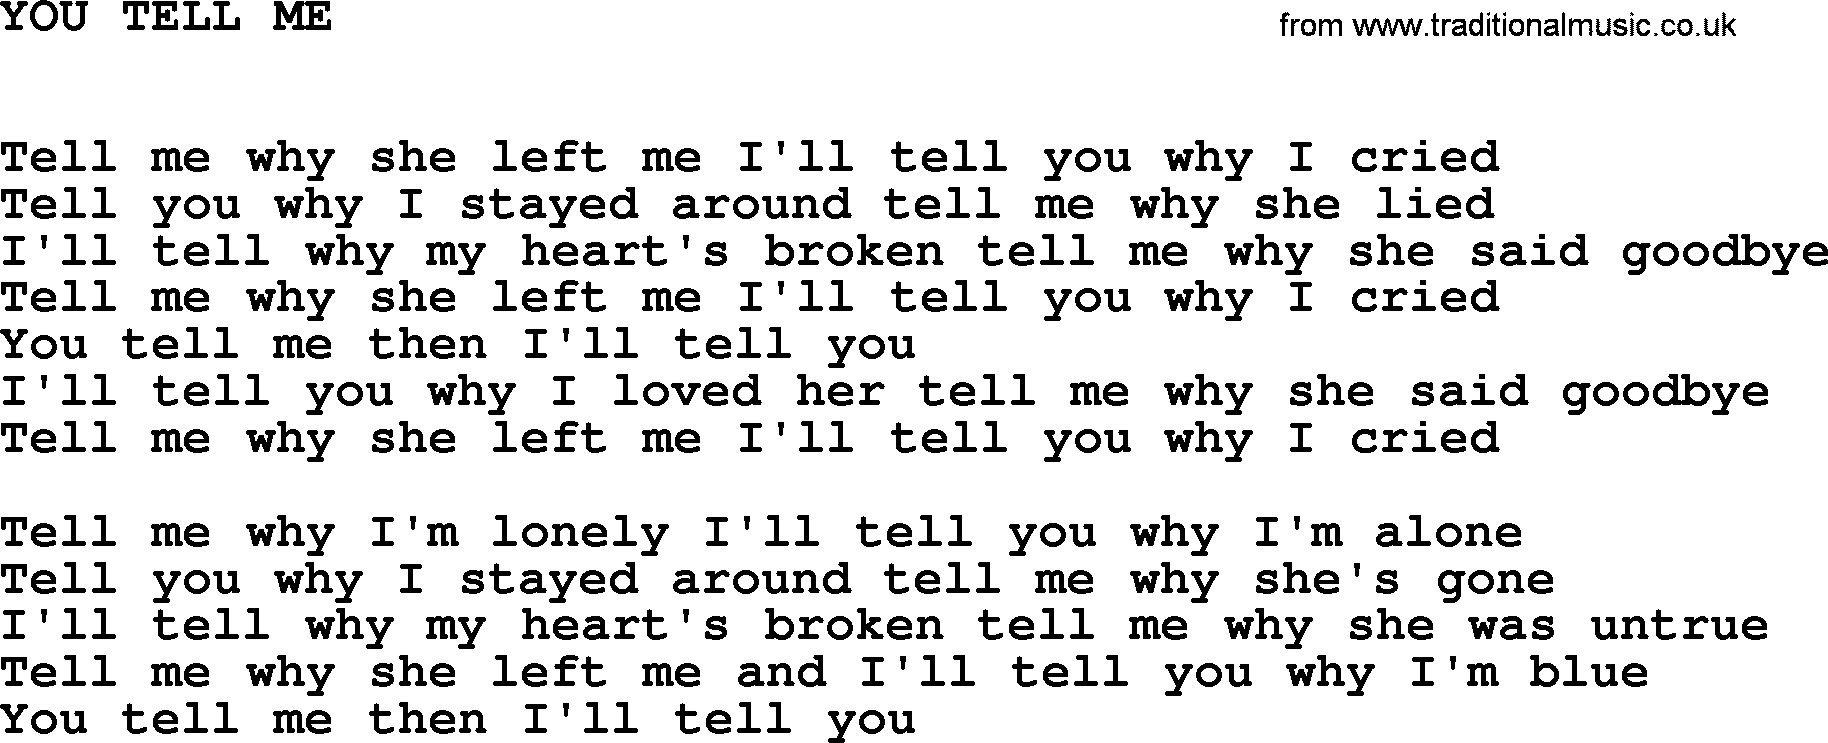 Johnny Cash song You Tell Me.txt lyrics